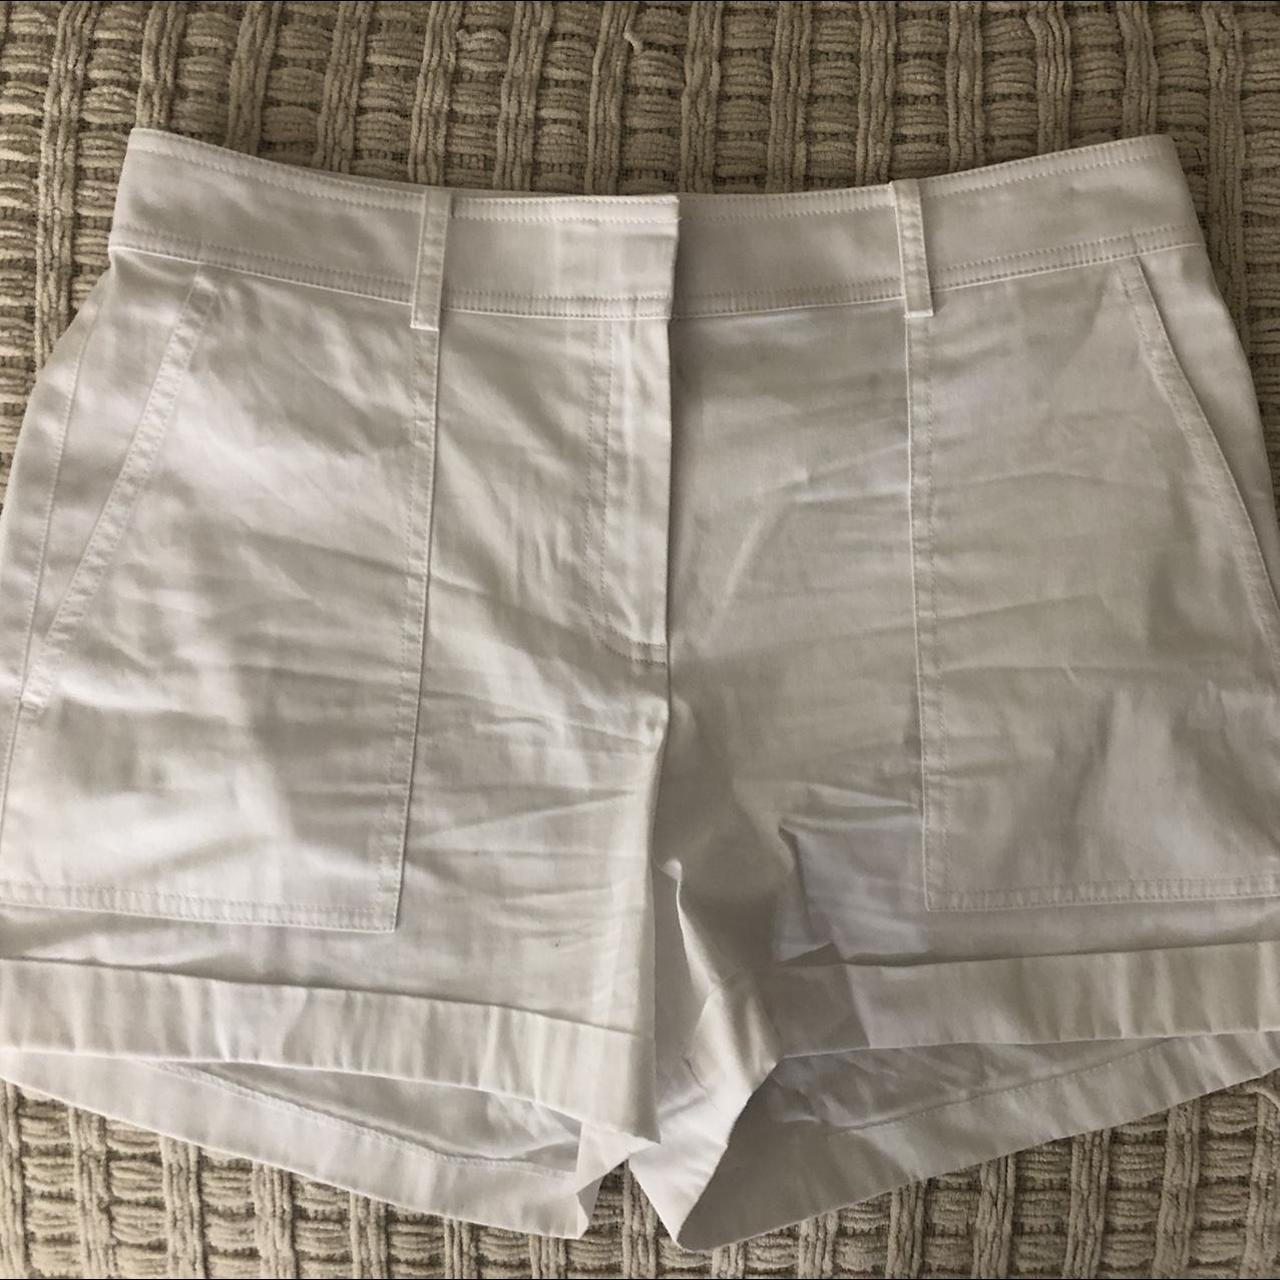 Theory women’s white shorts - Depop